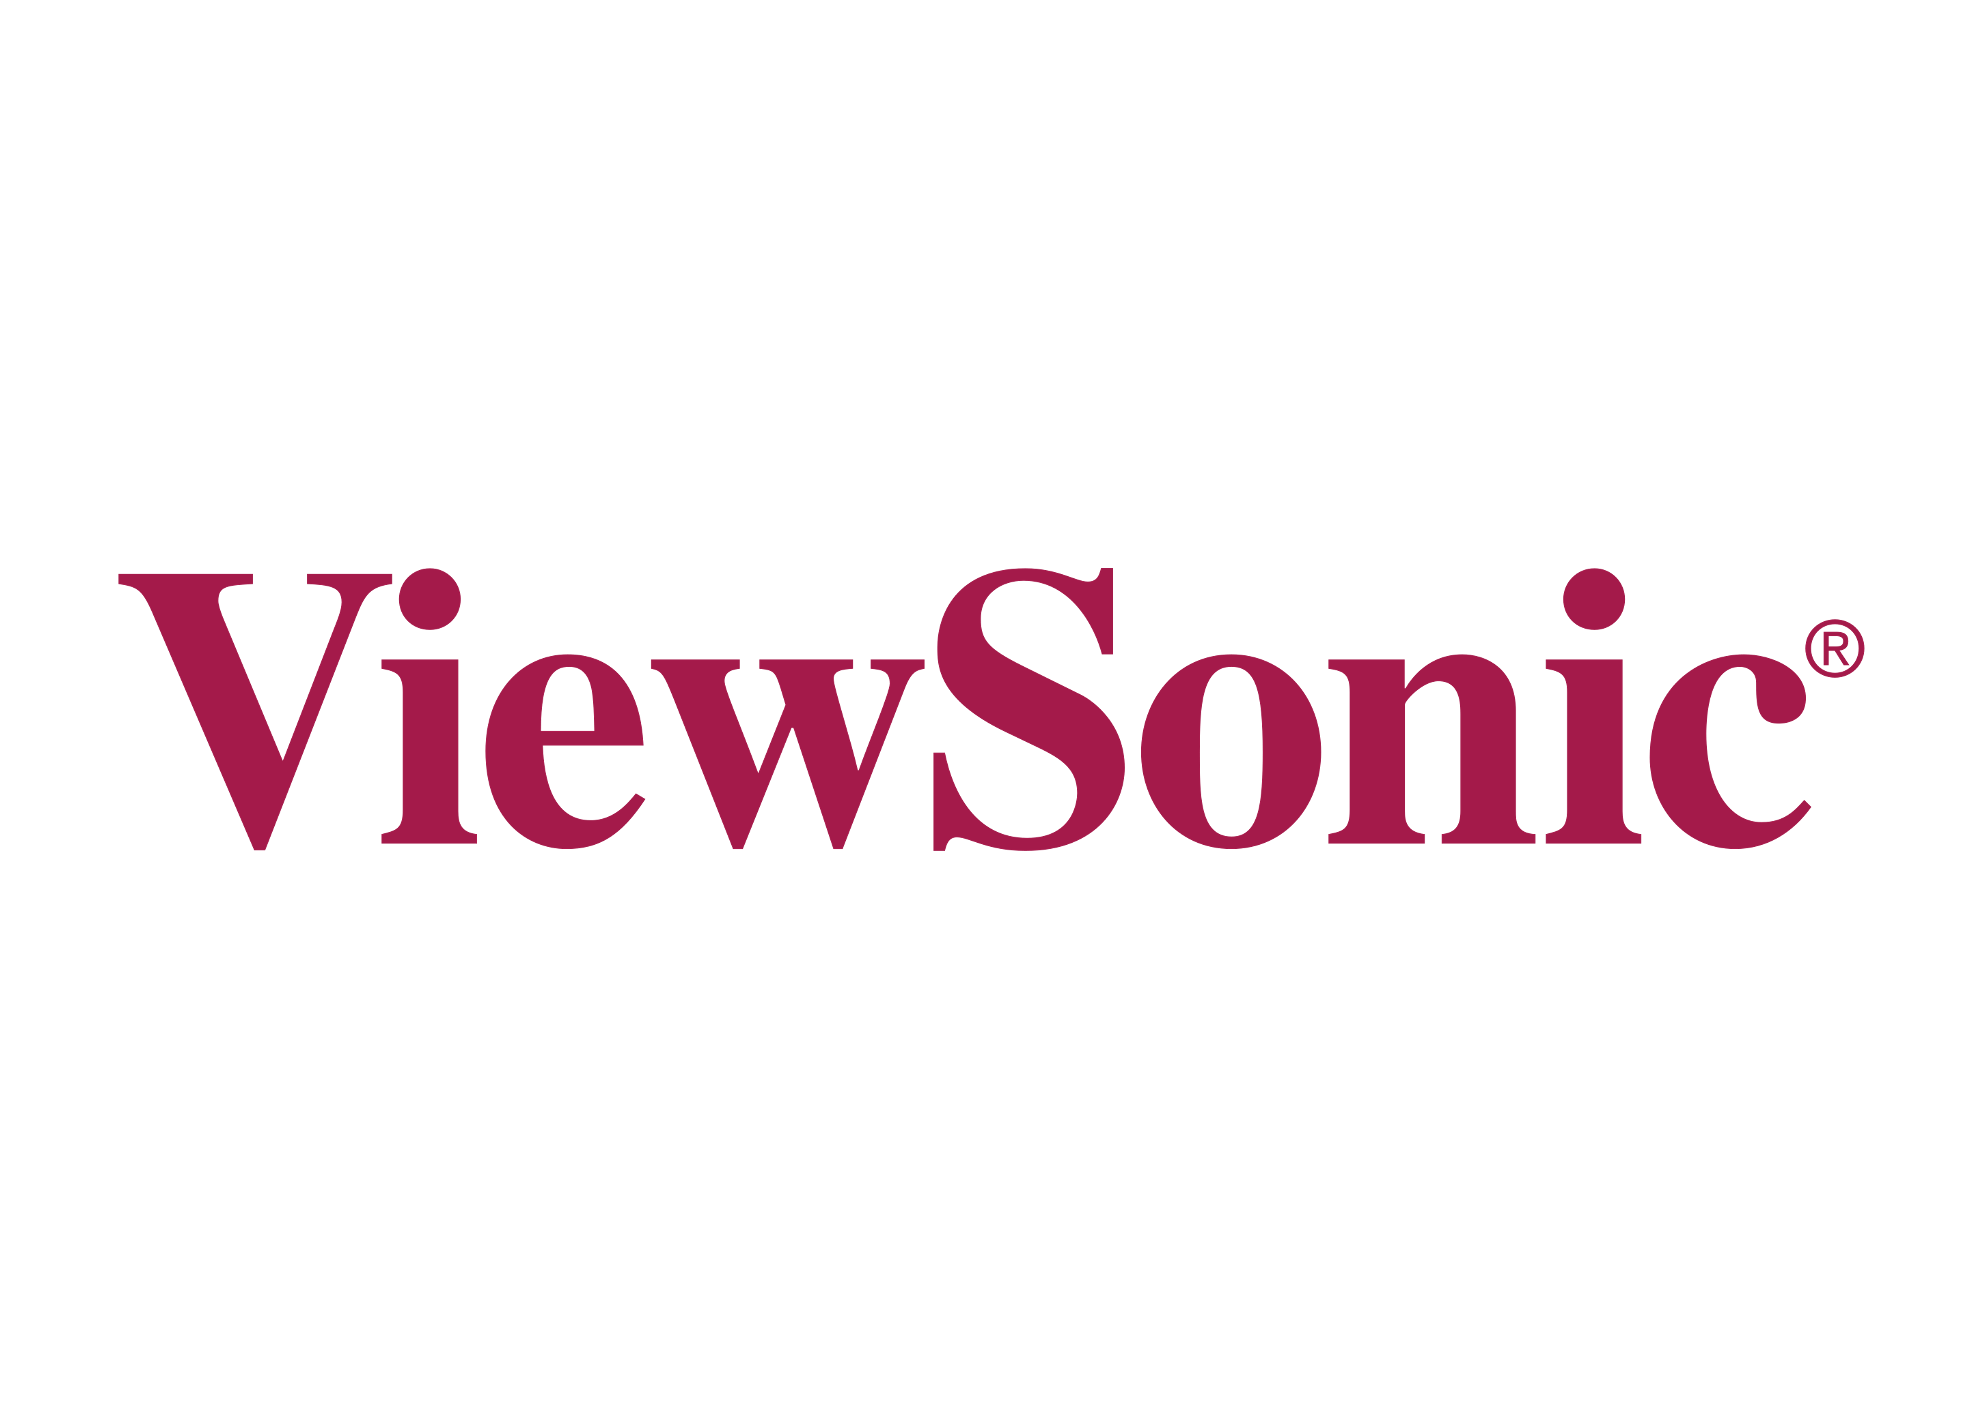 ViewSonic Enters Into MPEG LA’s MPEG-2 and ATSC Licenses